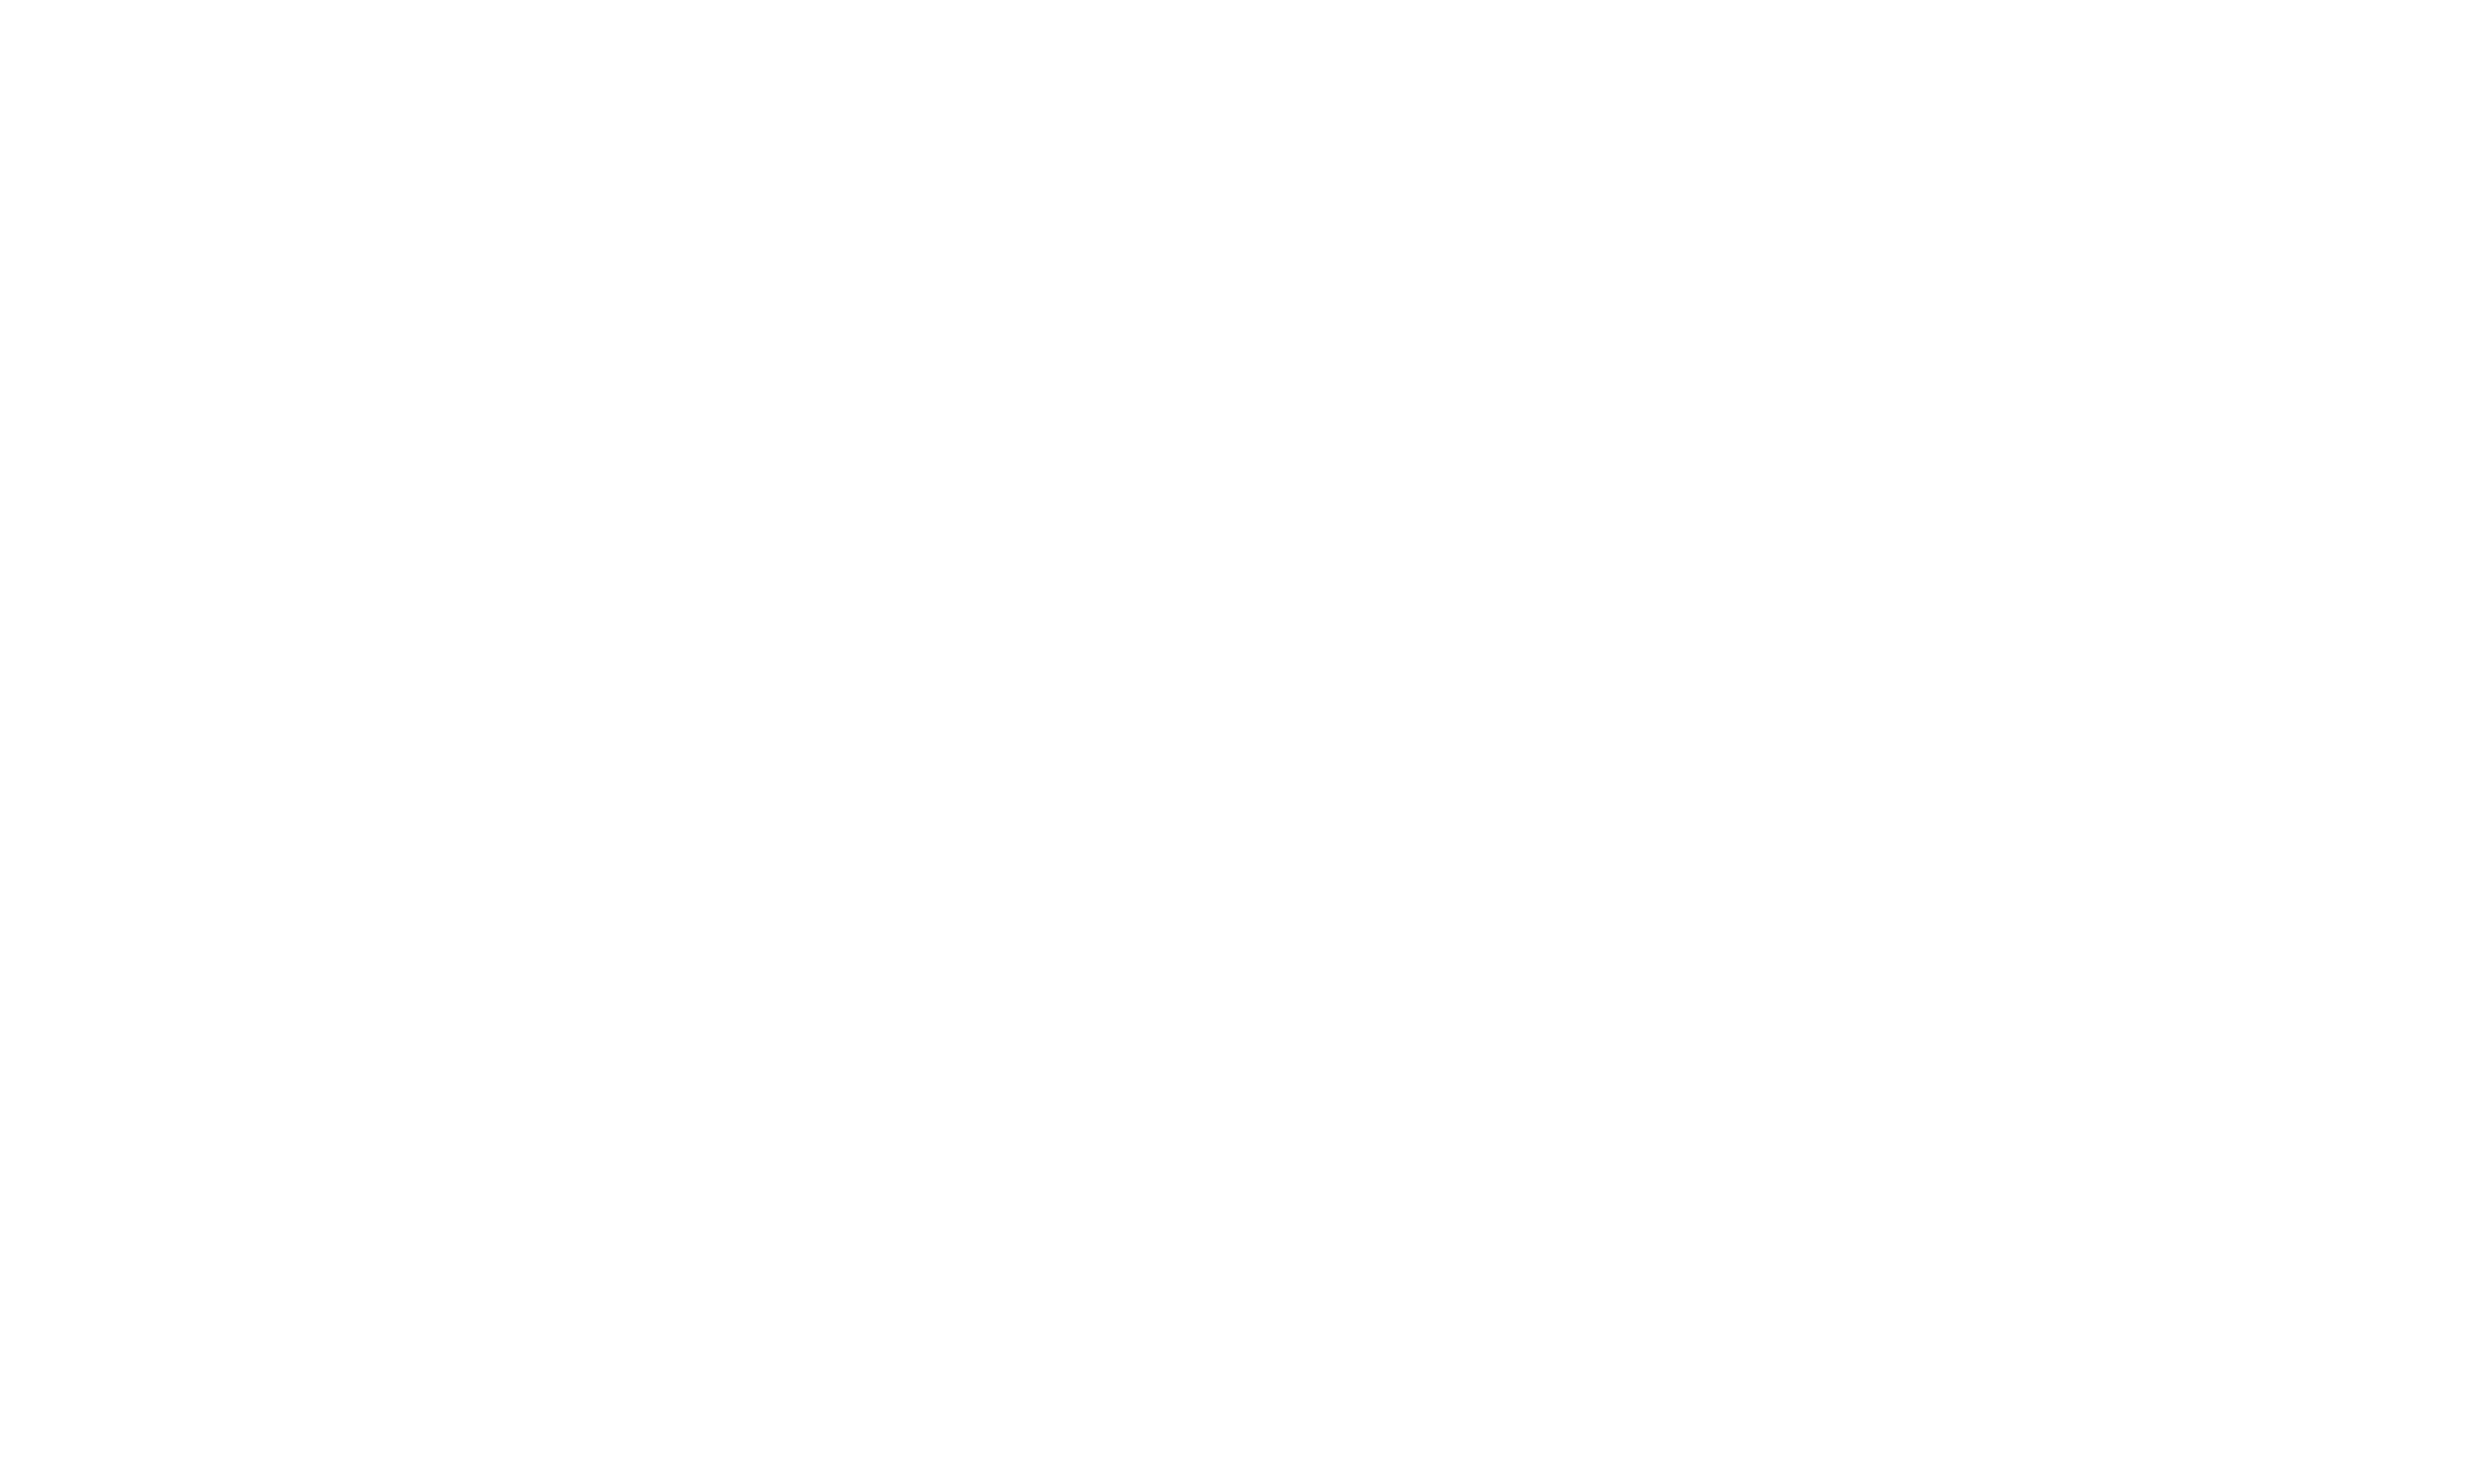 CHINESE_Simplified_white logo RGC SPORTS